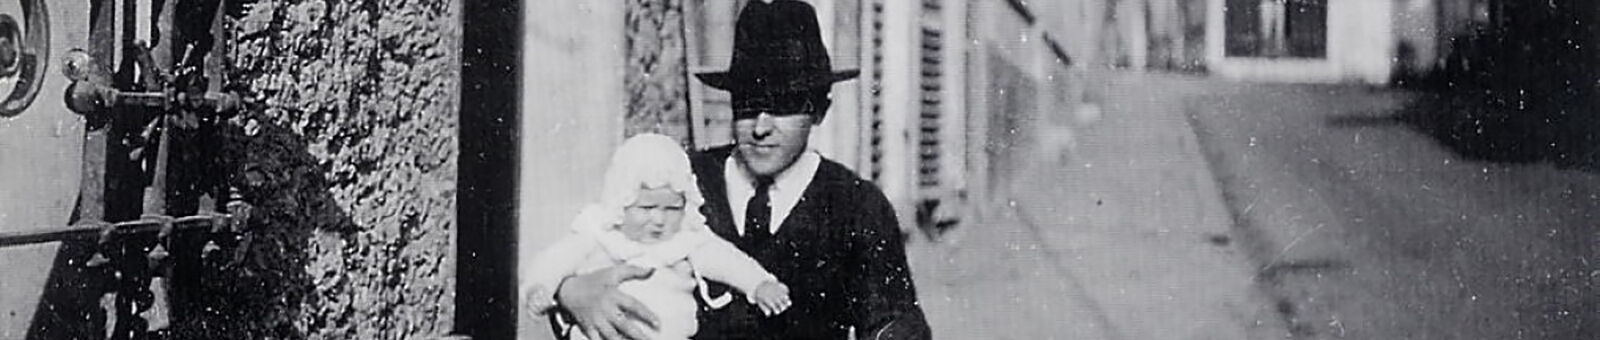 Henri Amodru et sa fille à Gif dans la Grande Rue (Rue Amodru) en 1932 